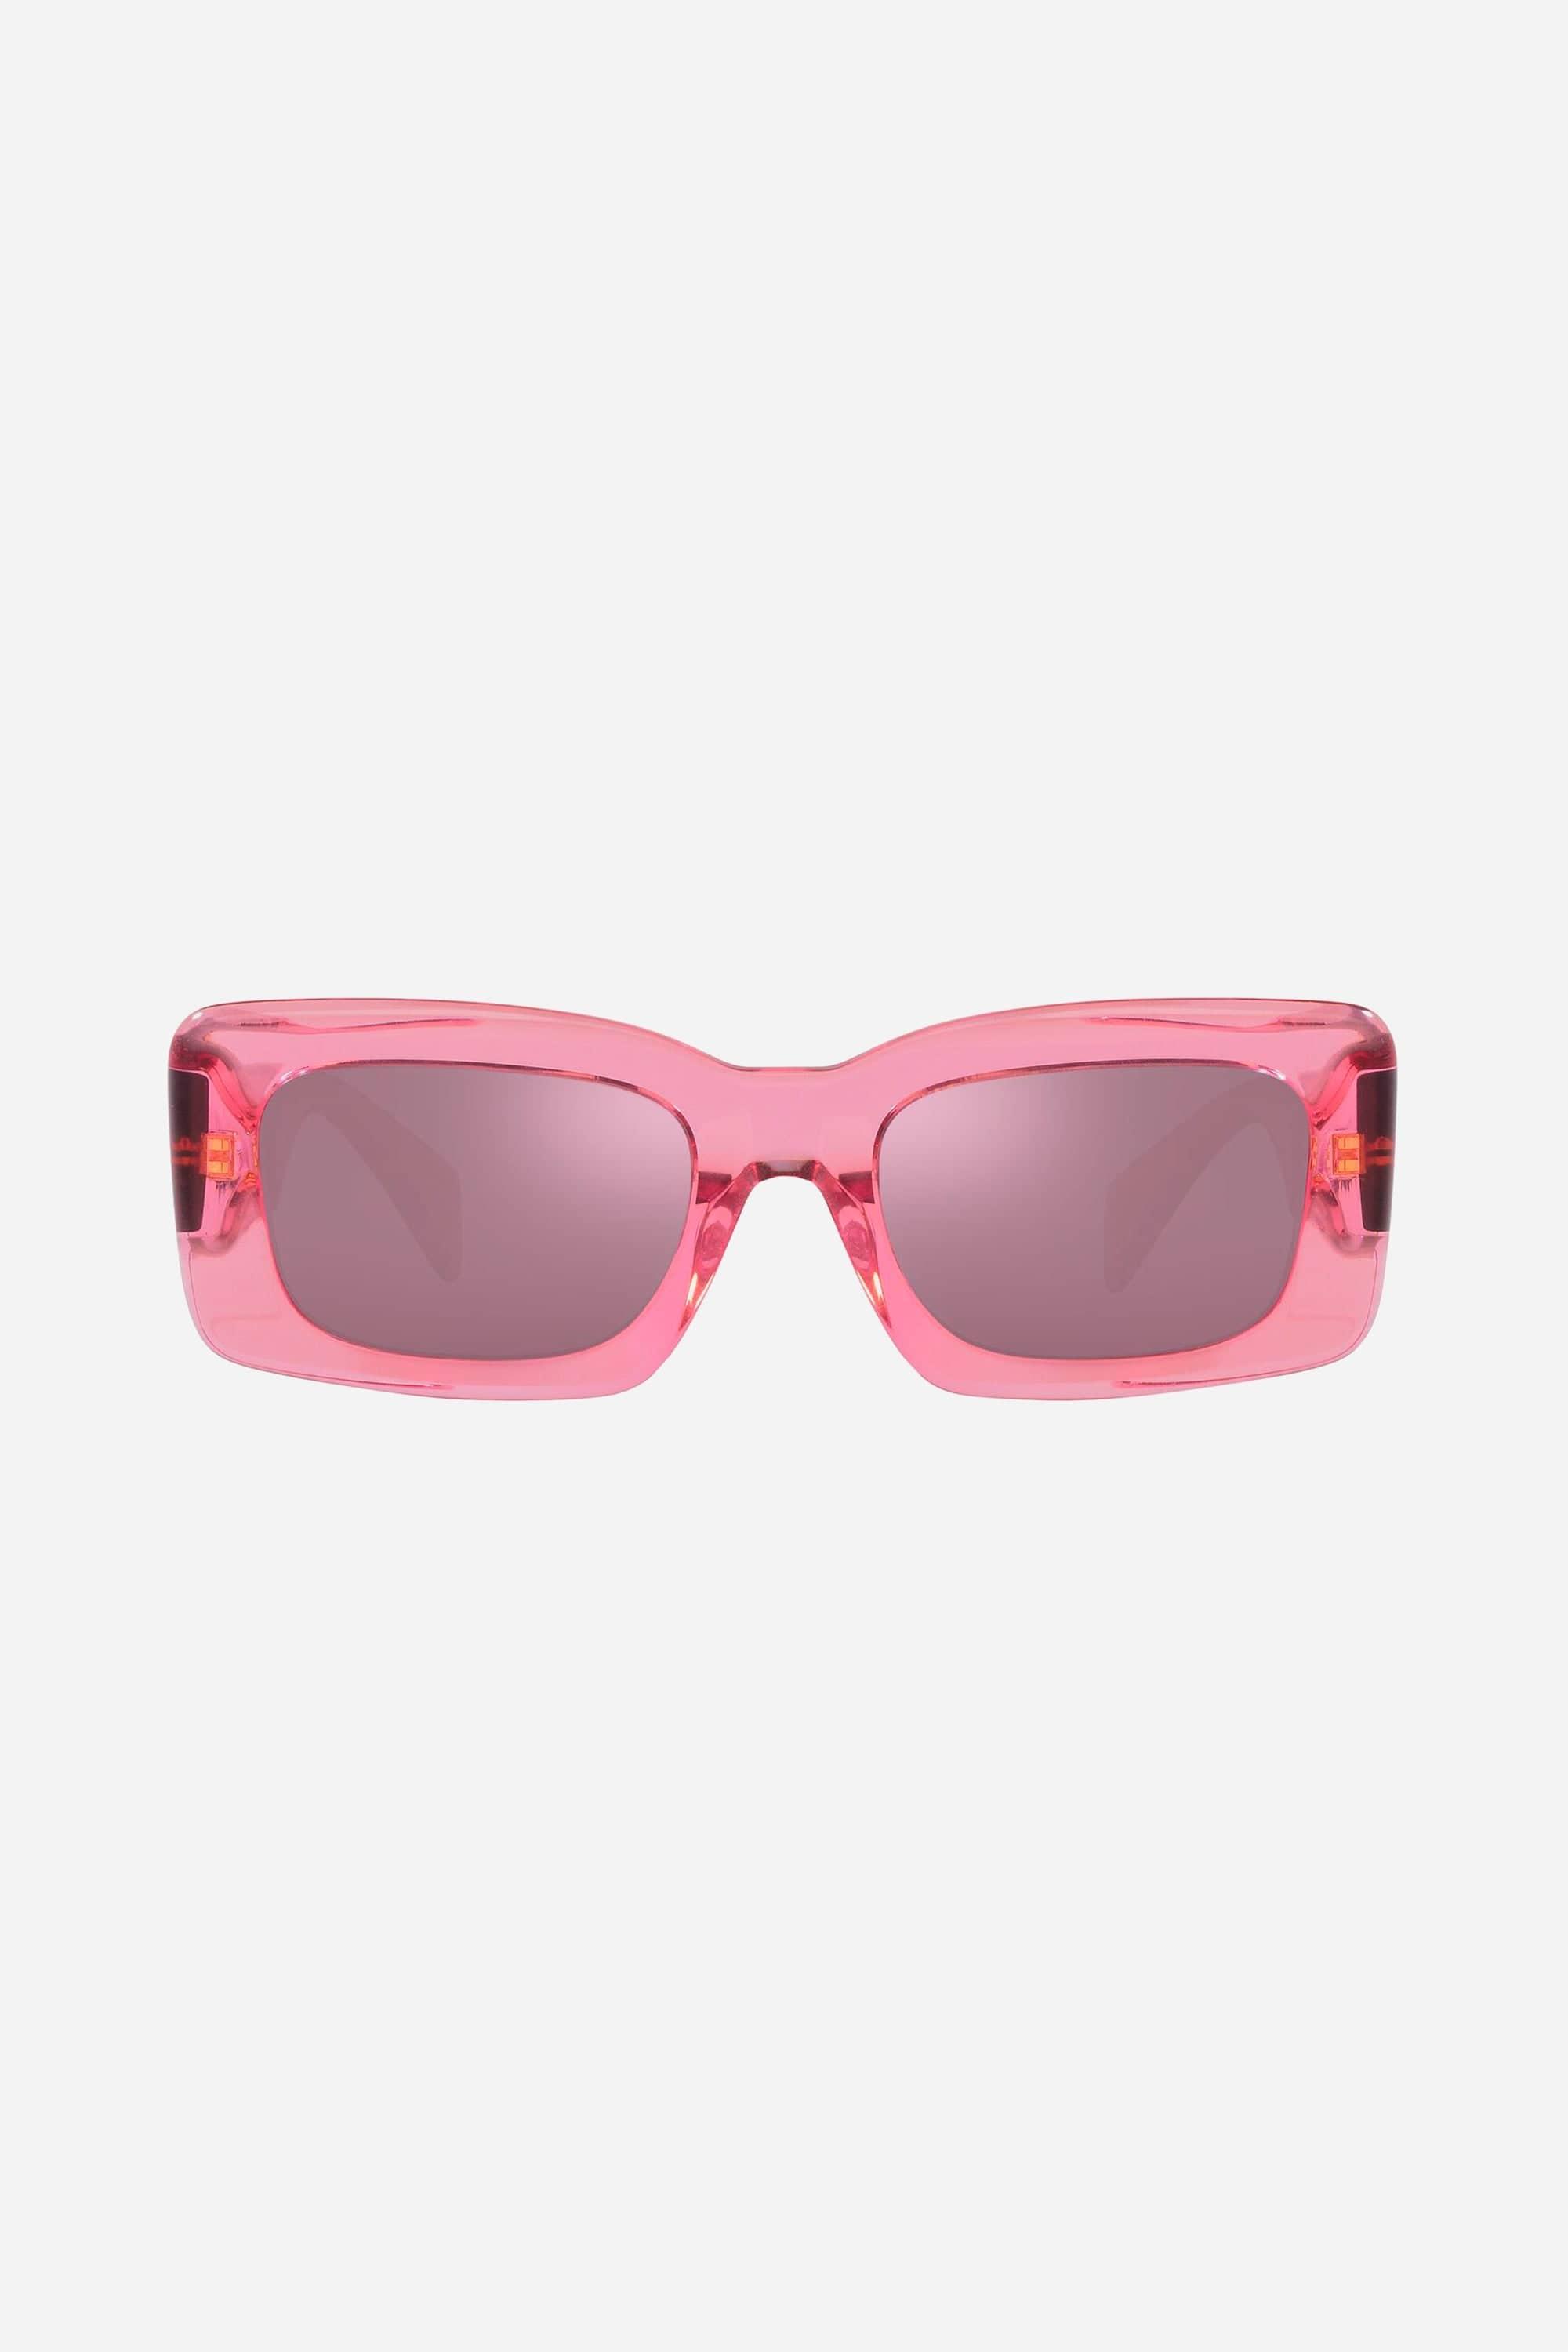 Versace Squared Transparent Pink Sunglasses